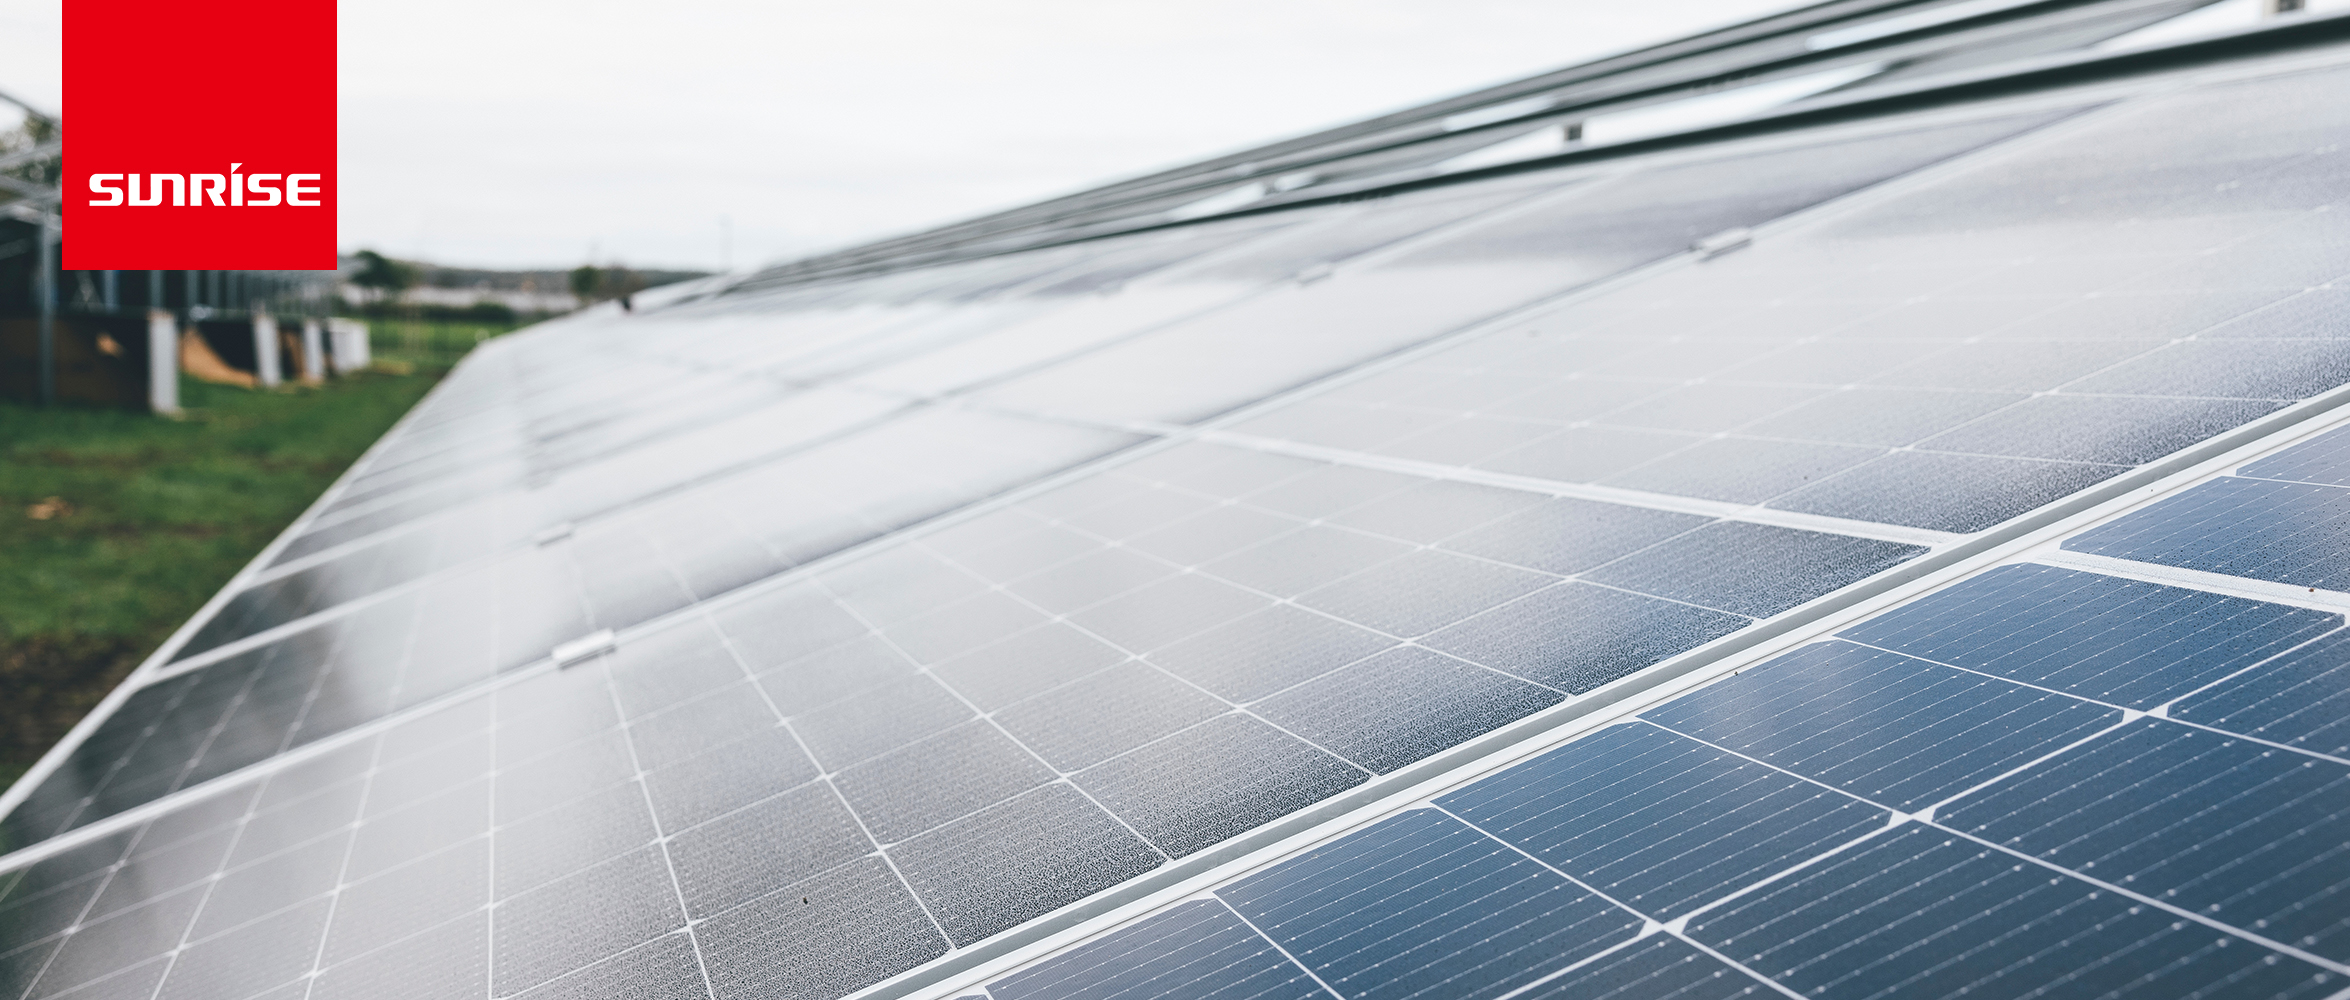 Design Essentials for the Solar PV Energy System